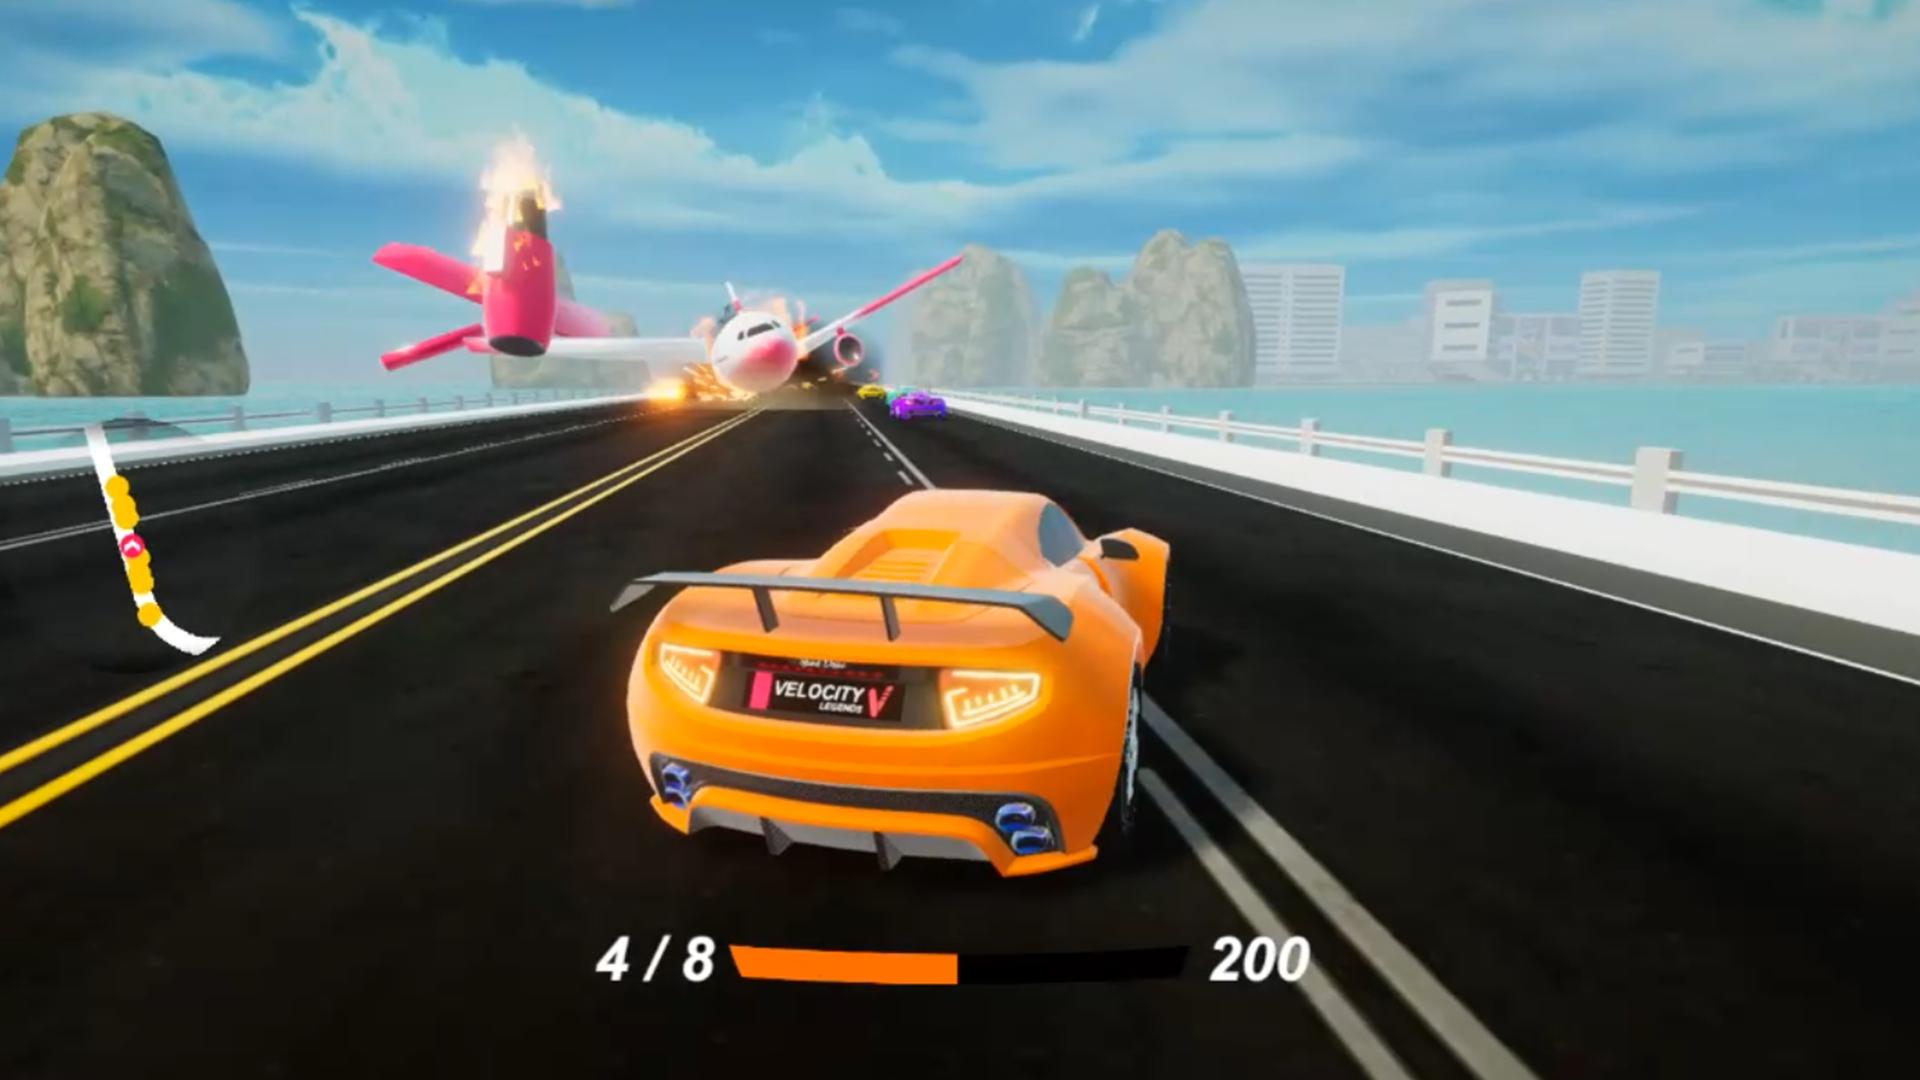 Velocity Legends Asphalt Car Action Racing Game 1.43 Screenshot 3